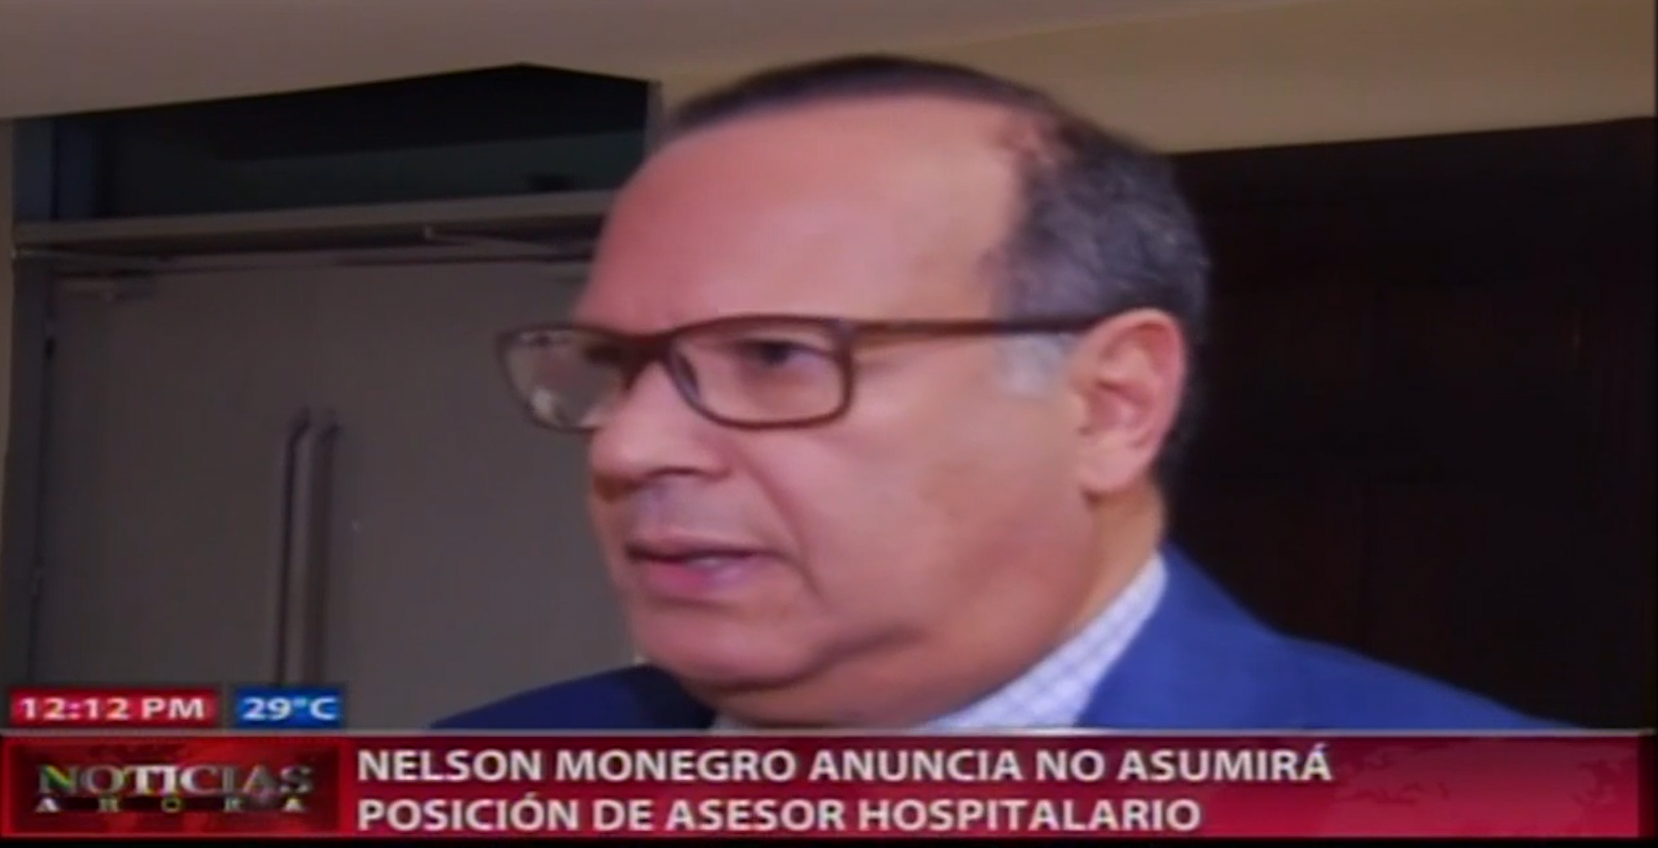 Nelson Monegro Anuncia Que No Asumirá Posición De Asesor Hospitalario, Después De Ser  Destituido De Director General